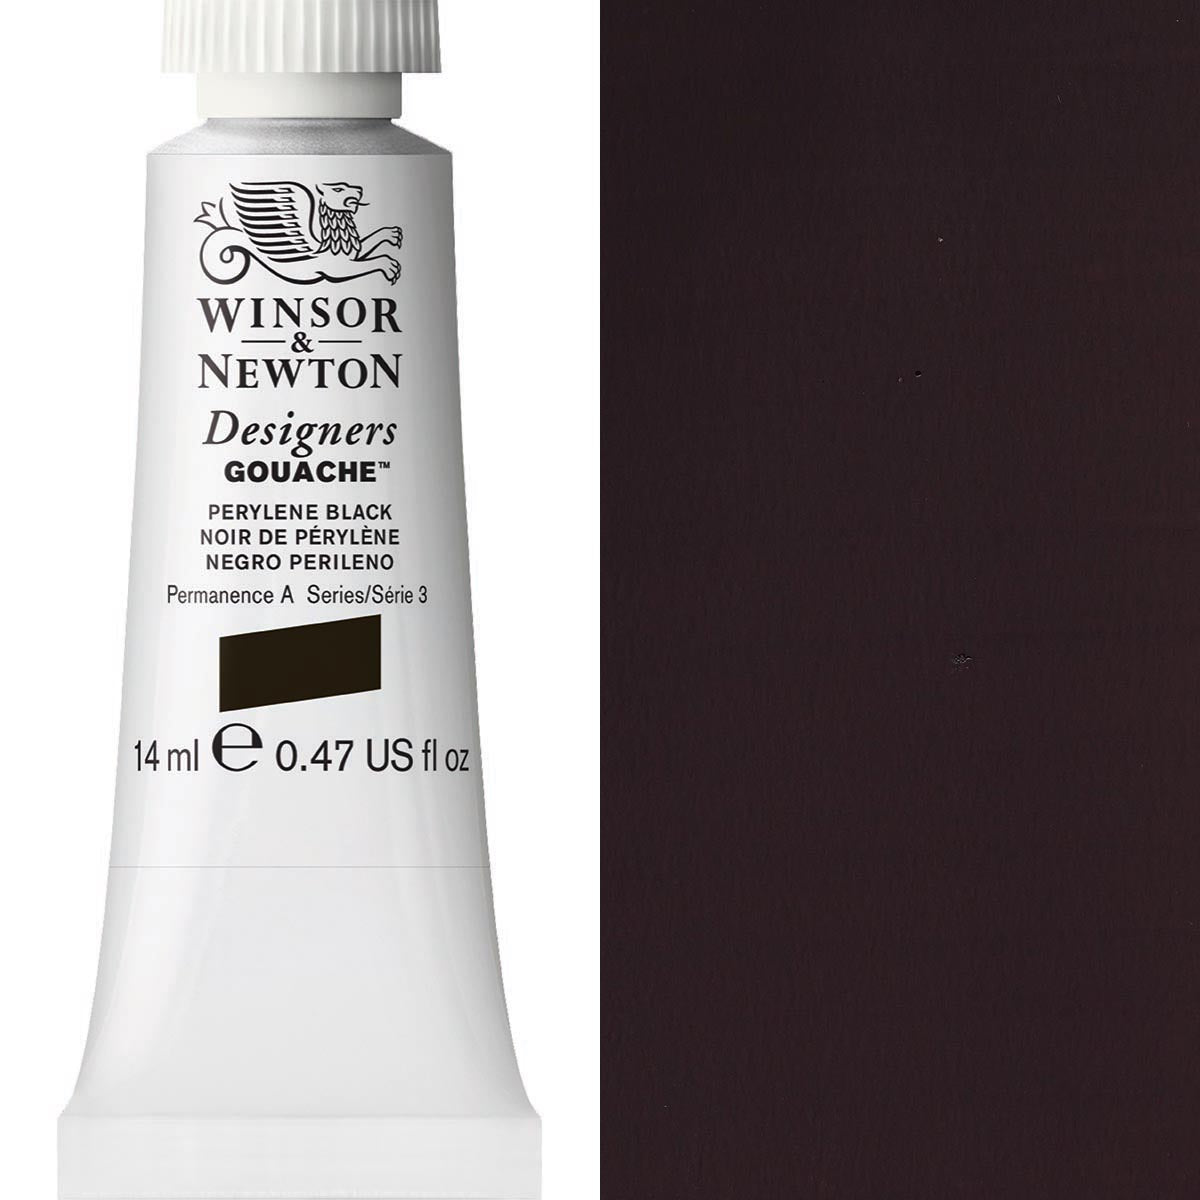 Winsor and Newton - Designers Gouache - 14ml - Perylene Black